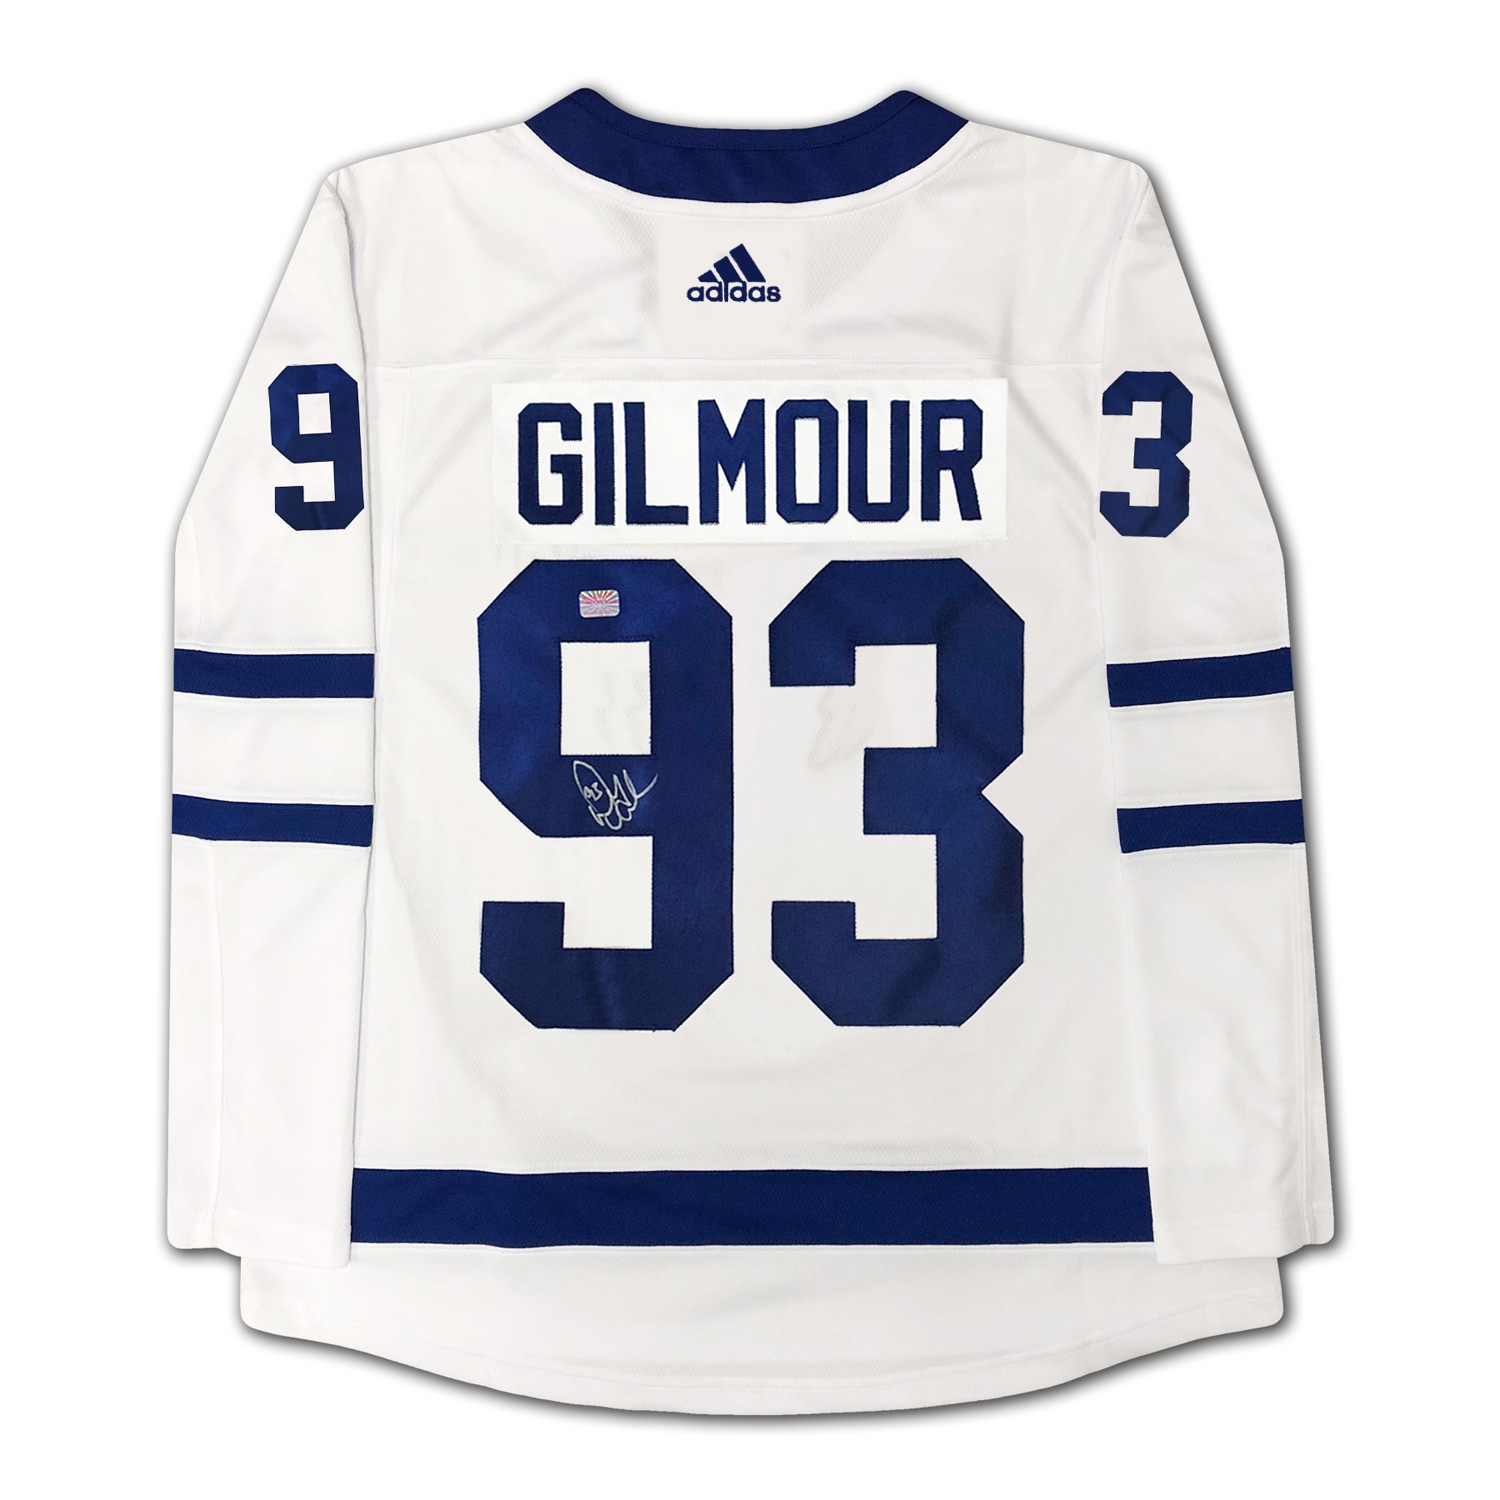 Doug Gilmour Signed Adidas White Toronto Maple Leafs Jersey